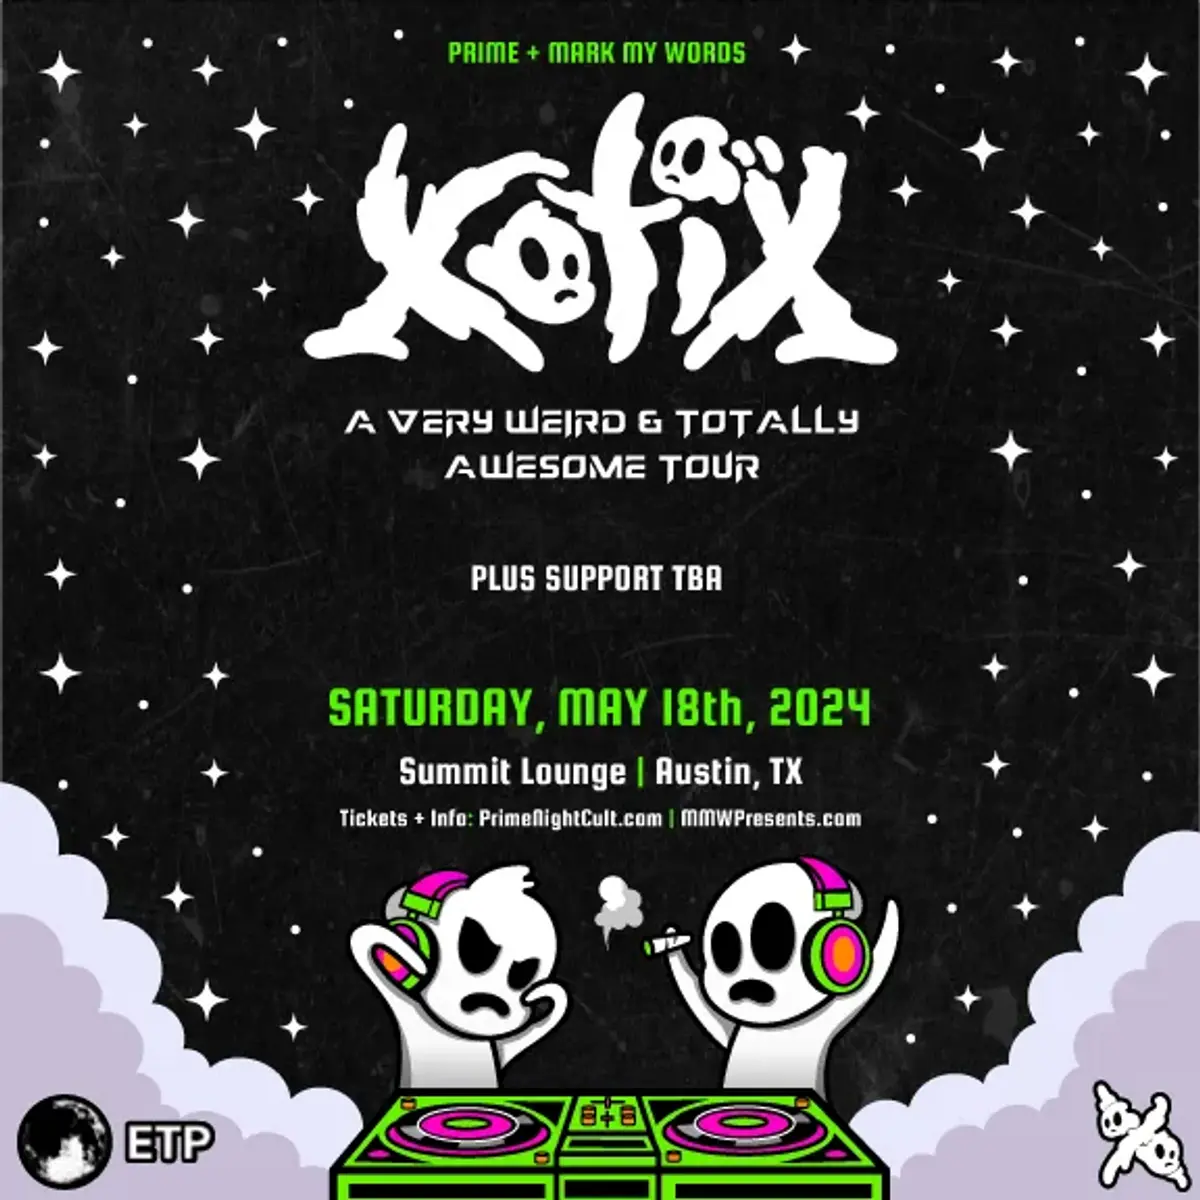 Xotix - A Very Weird & Totally Awesome Tour: Dallas, TX